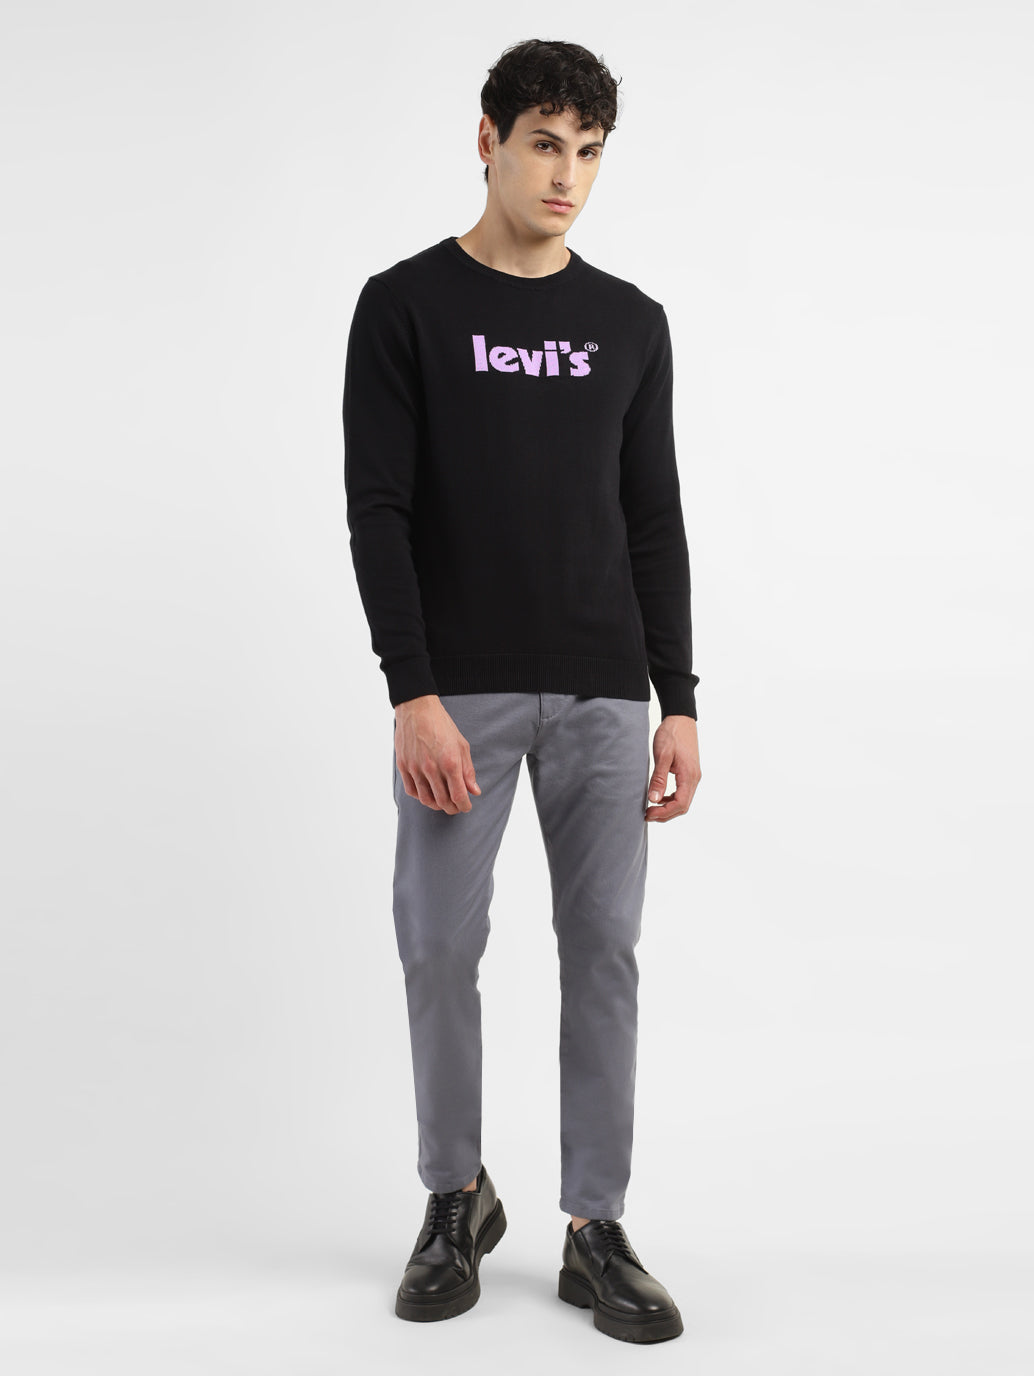 Men's Printed Crew Neck Sweater